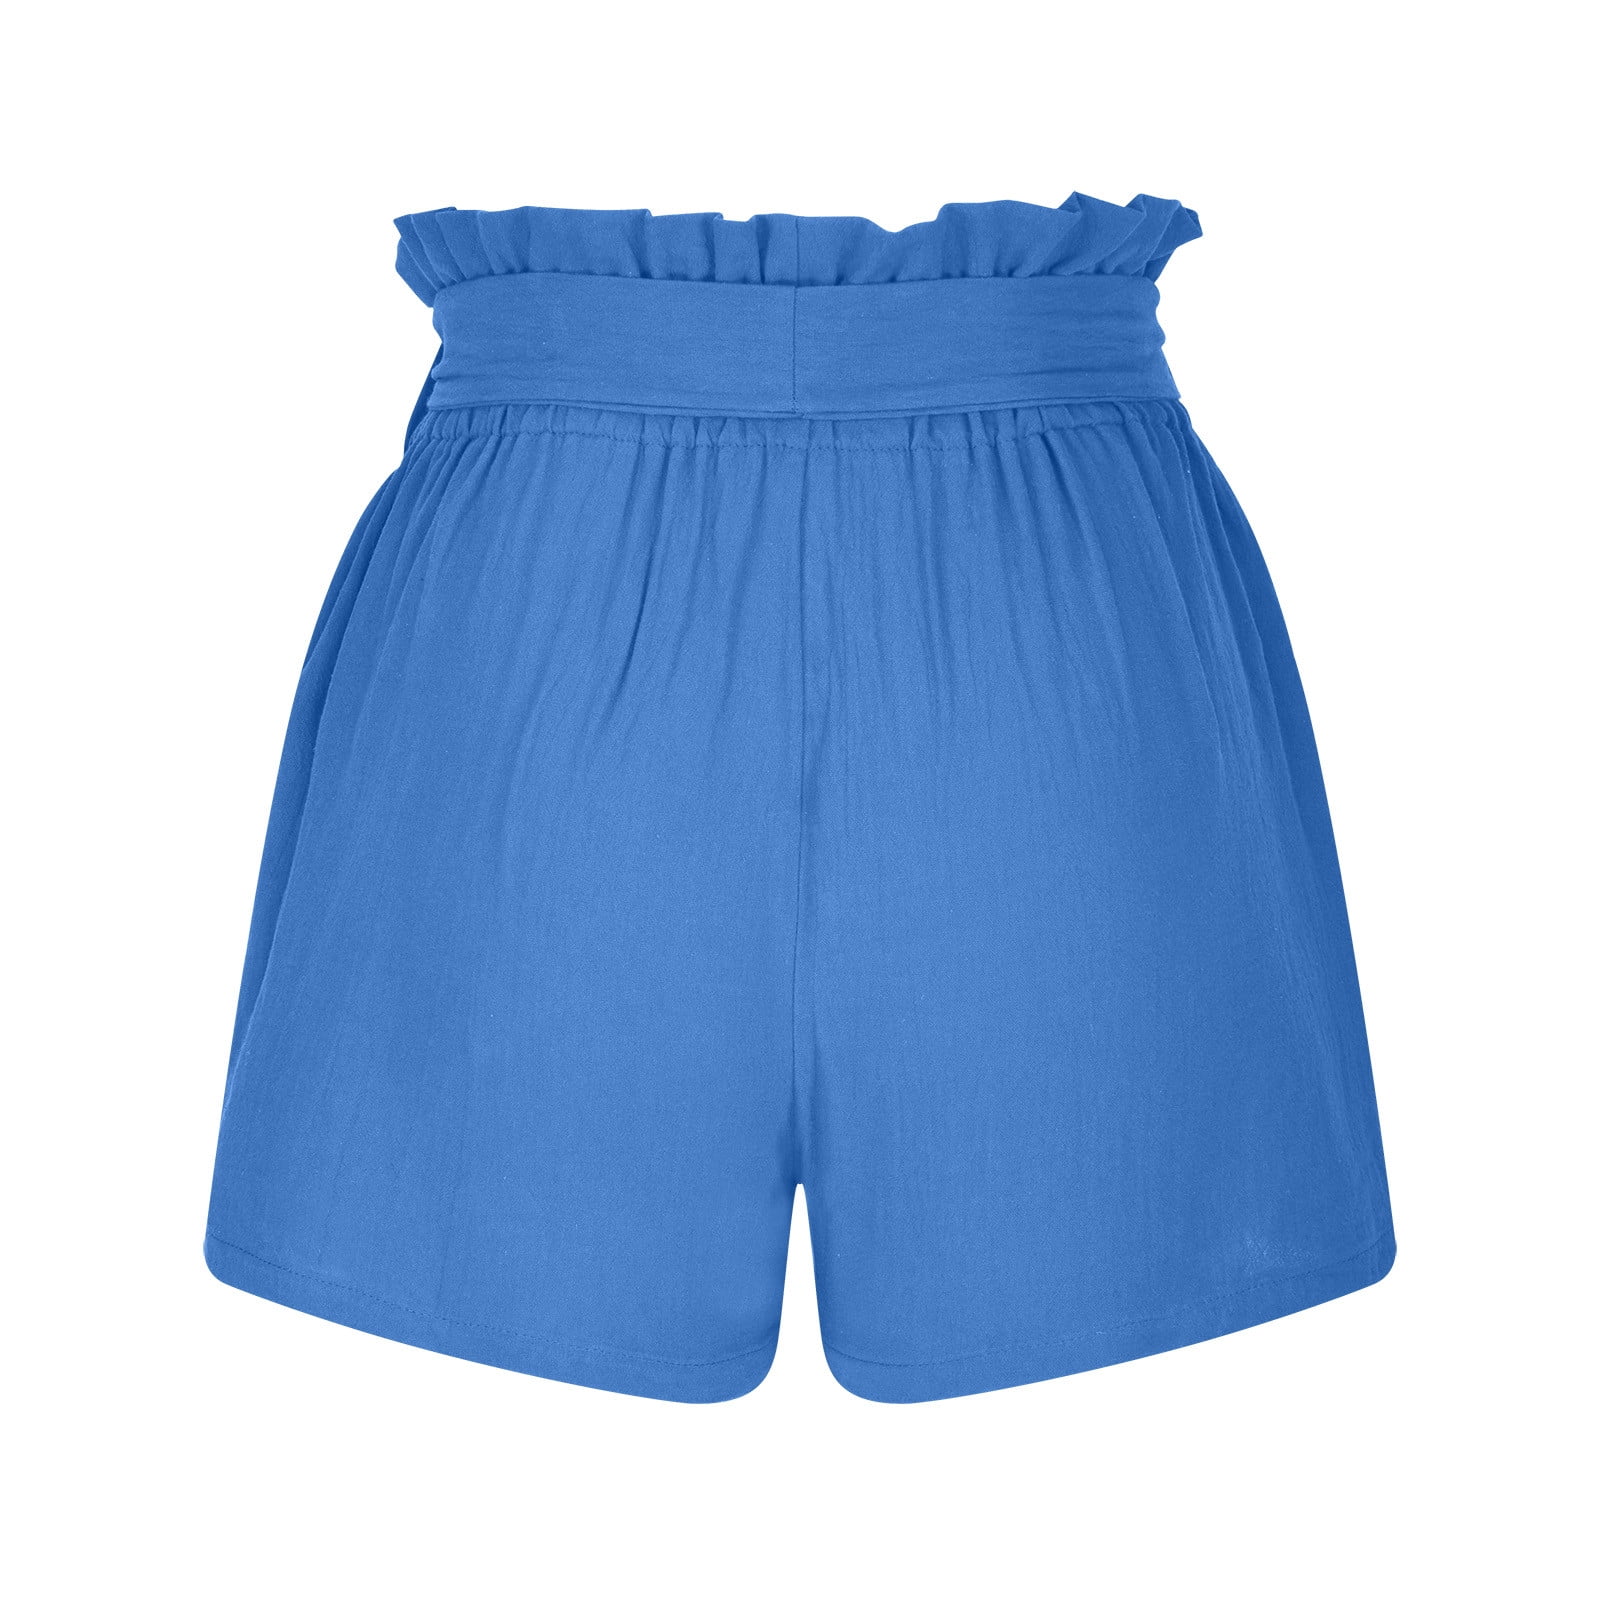 WAJCSHFS Shorts for Women High Waist Shorts with Pockets Wide Leg Shorts  Baggy Casual Elastic Waist Athletic Shorts Blue at  Women's Clothing  store